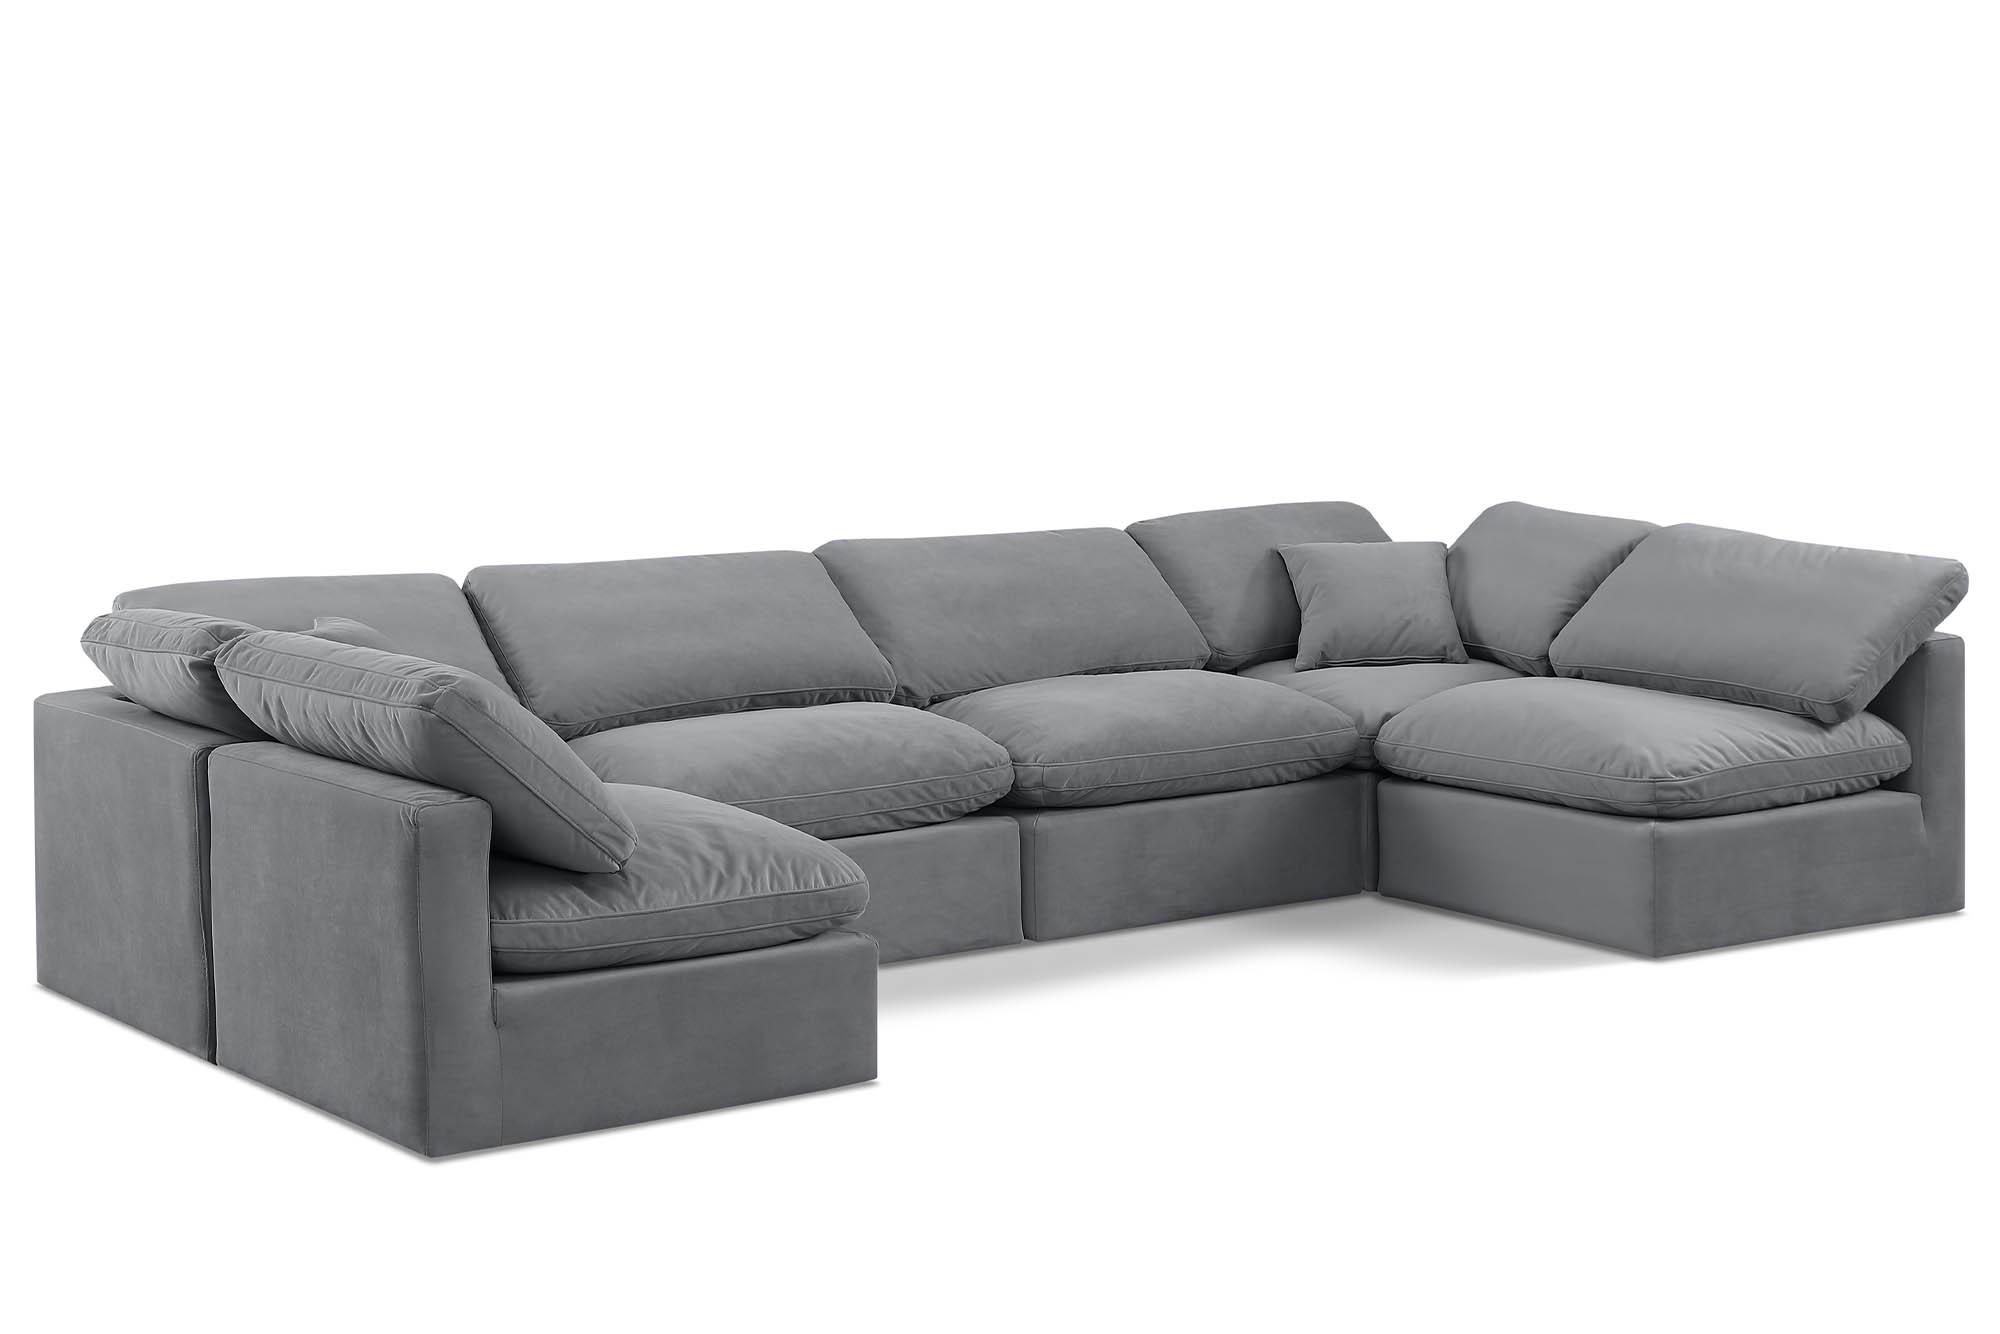 Contemporary, Modern Modular Sectional Sofa INDULGE 147Grey-Sec6D 147Grey-Sec6D in Gray Velvet